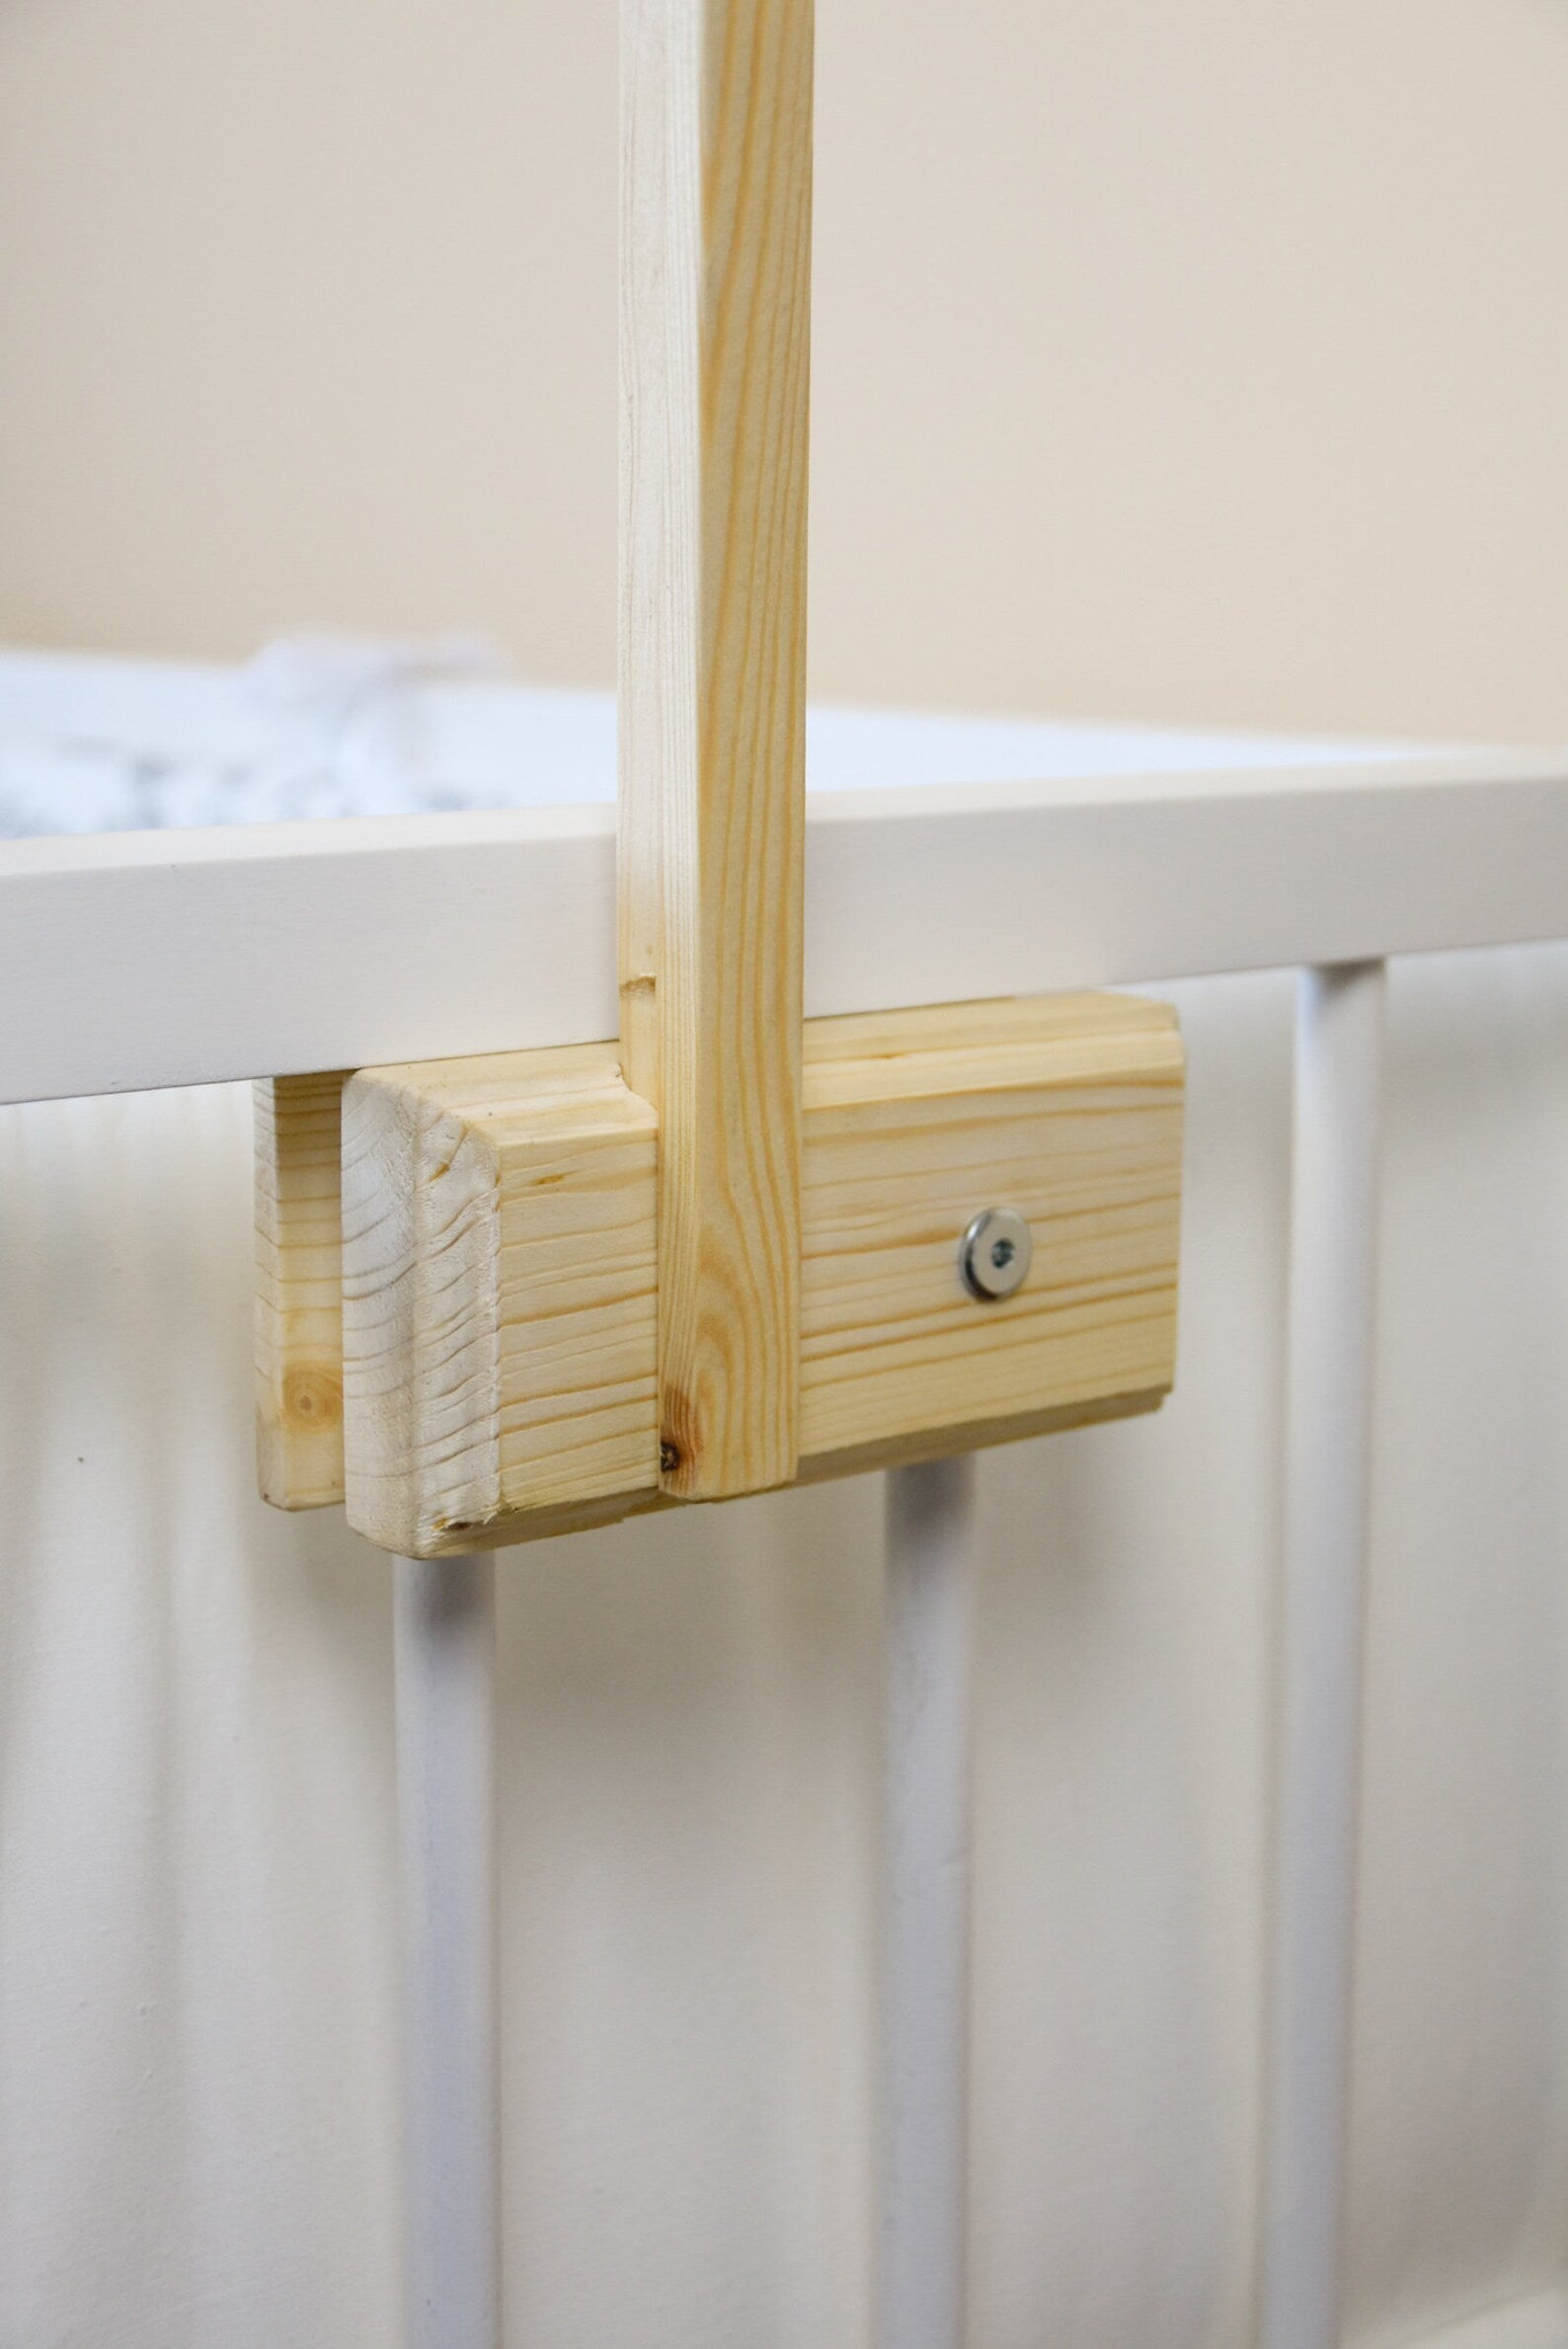  Wooden Crib Mobile Arm, Baby Crib Mobile Arm Wooden Holder